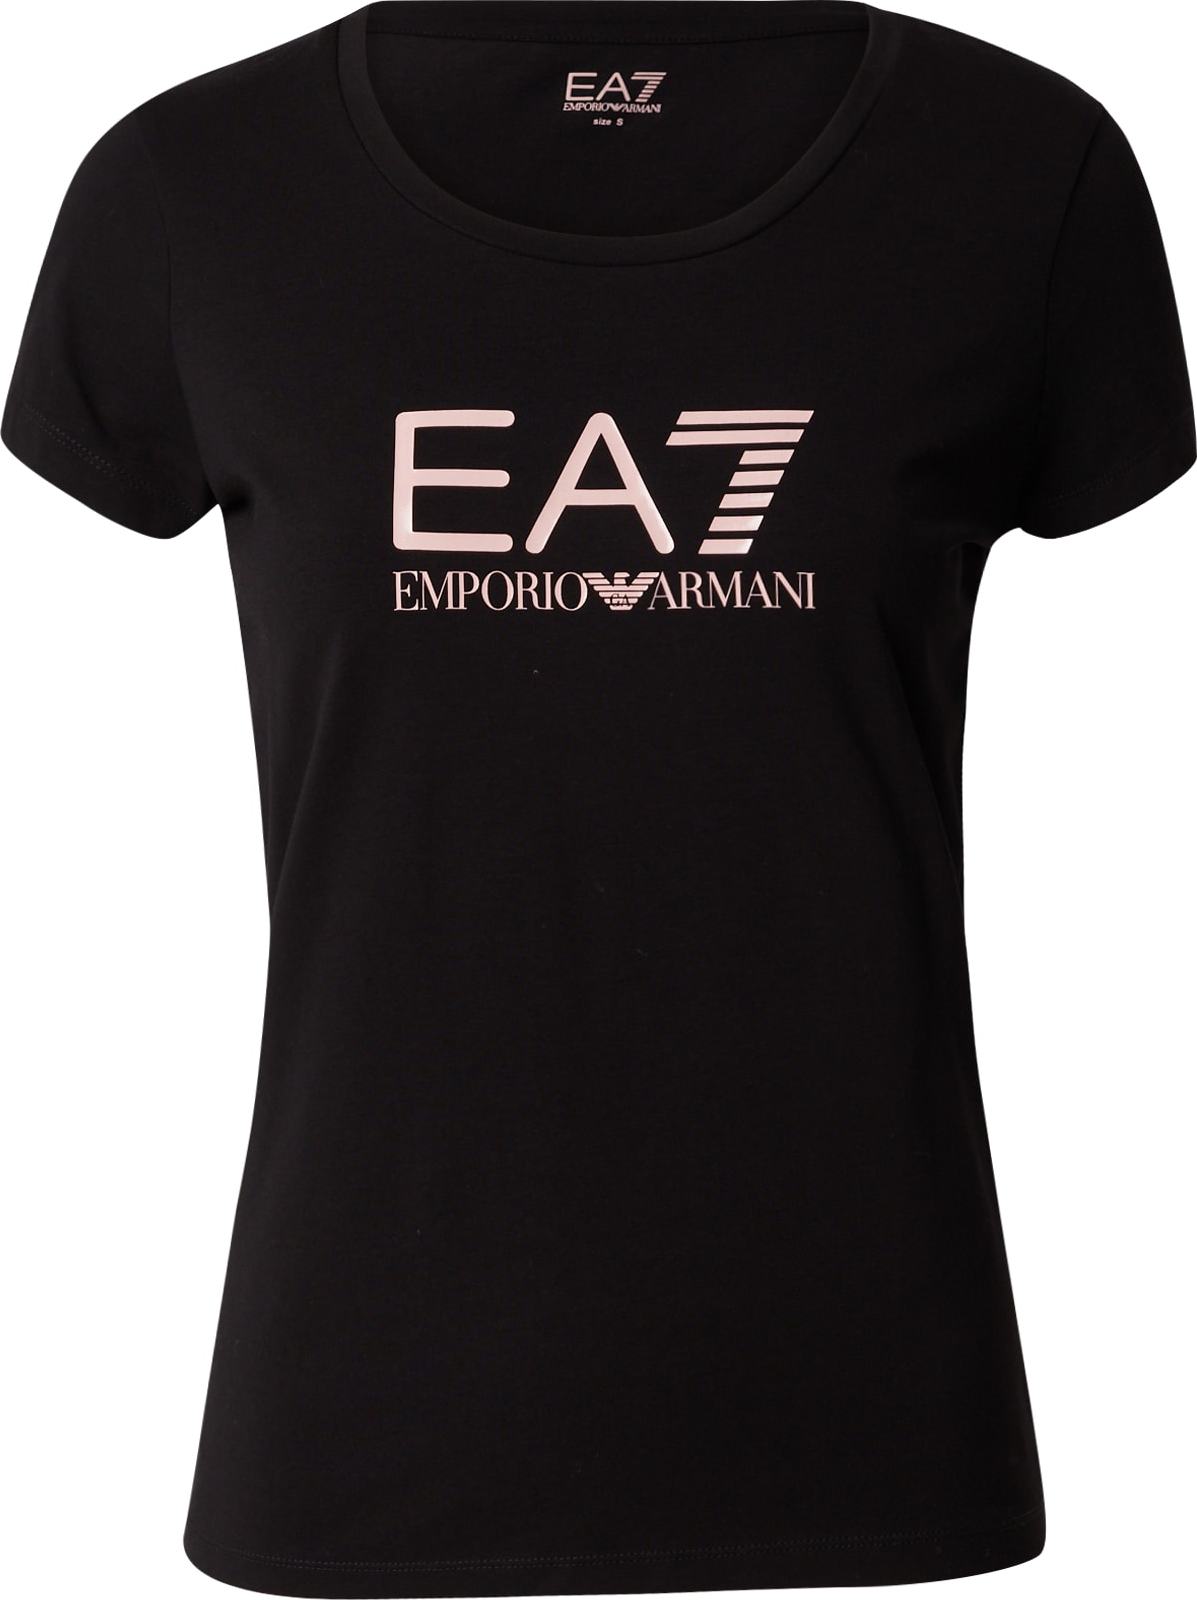 Tričko EA7 Emporio Armani tělová / černá